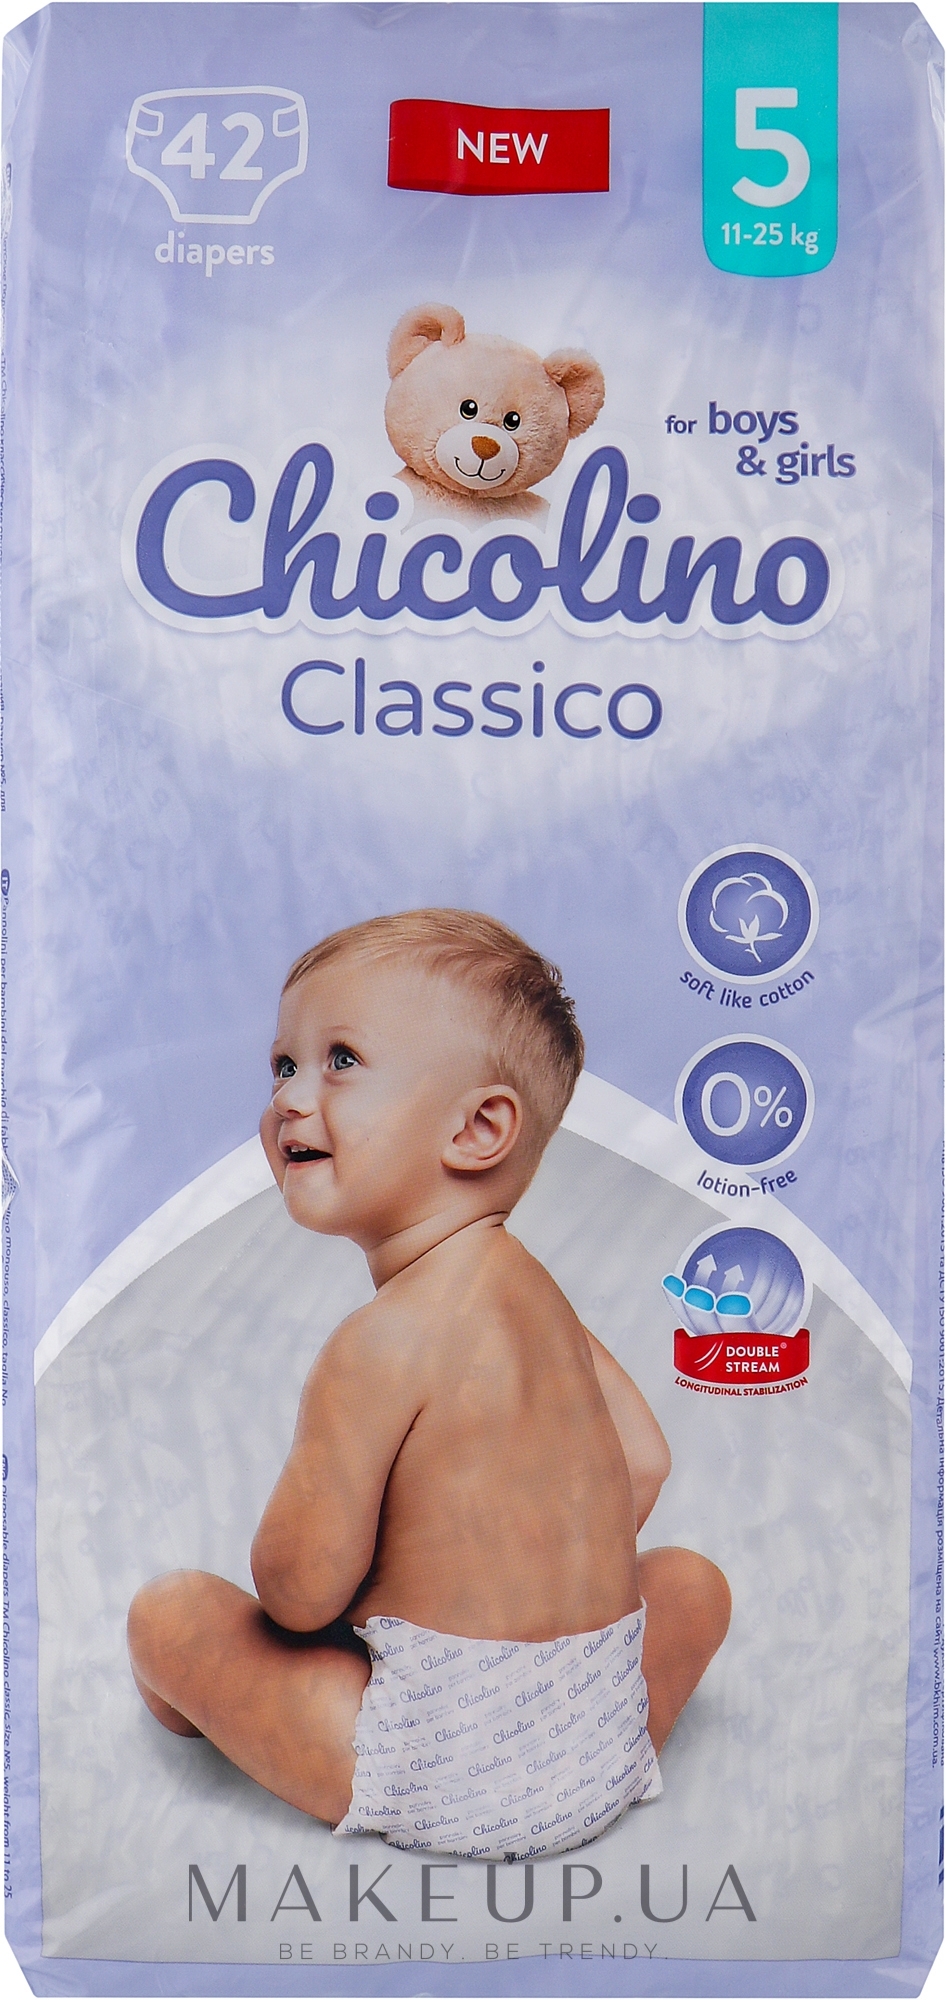 Детские подгузники "Classico", 11-25 кг, размер 5, 84 шт. - Chicolino — фото 84шт